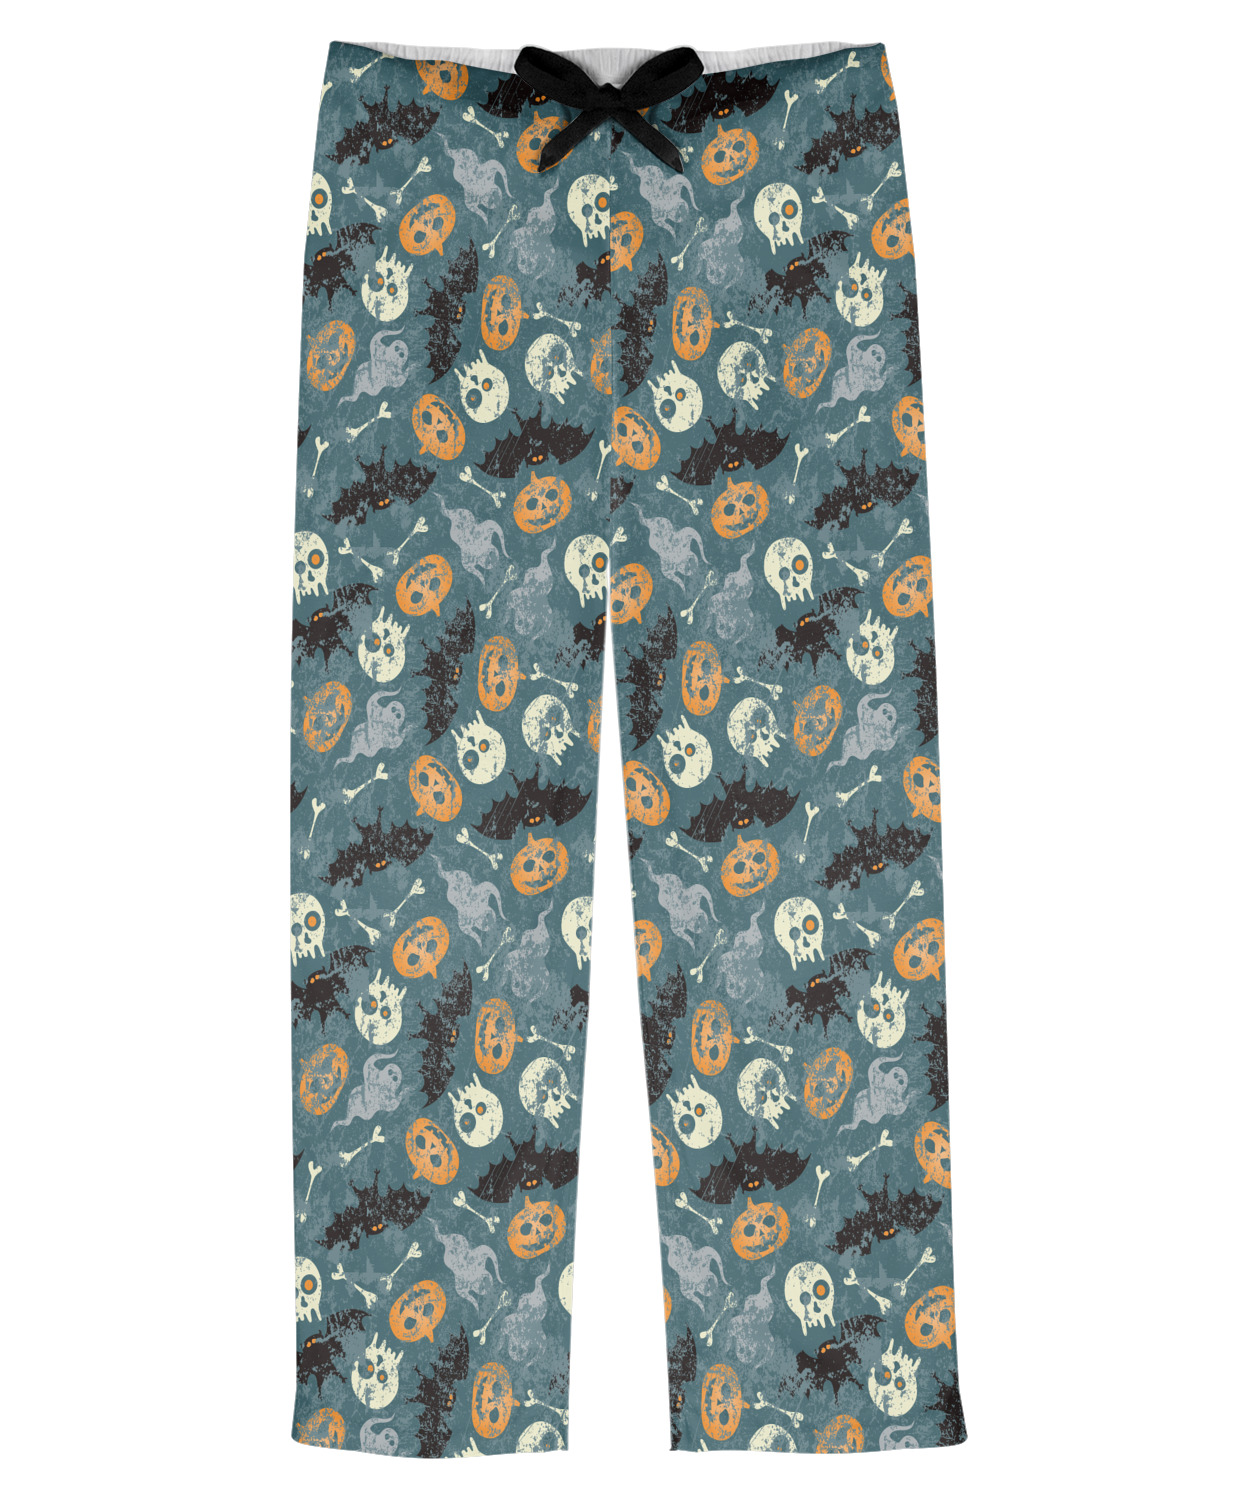 Vintage / Grunge Halloween Mens Pajama Pants - S (Personalized ...